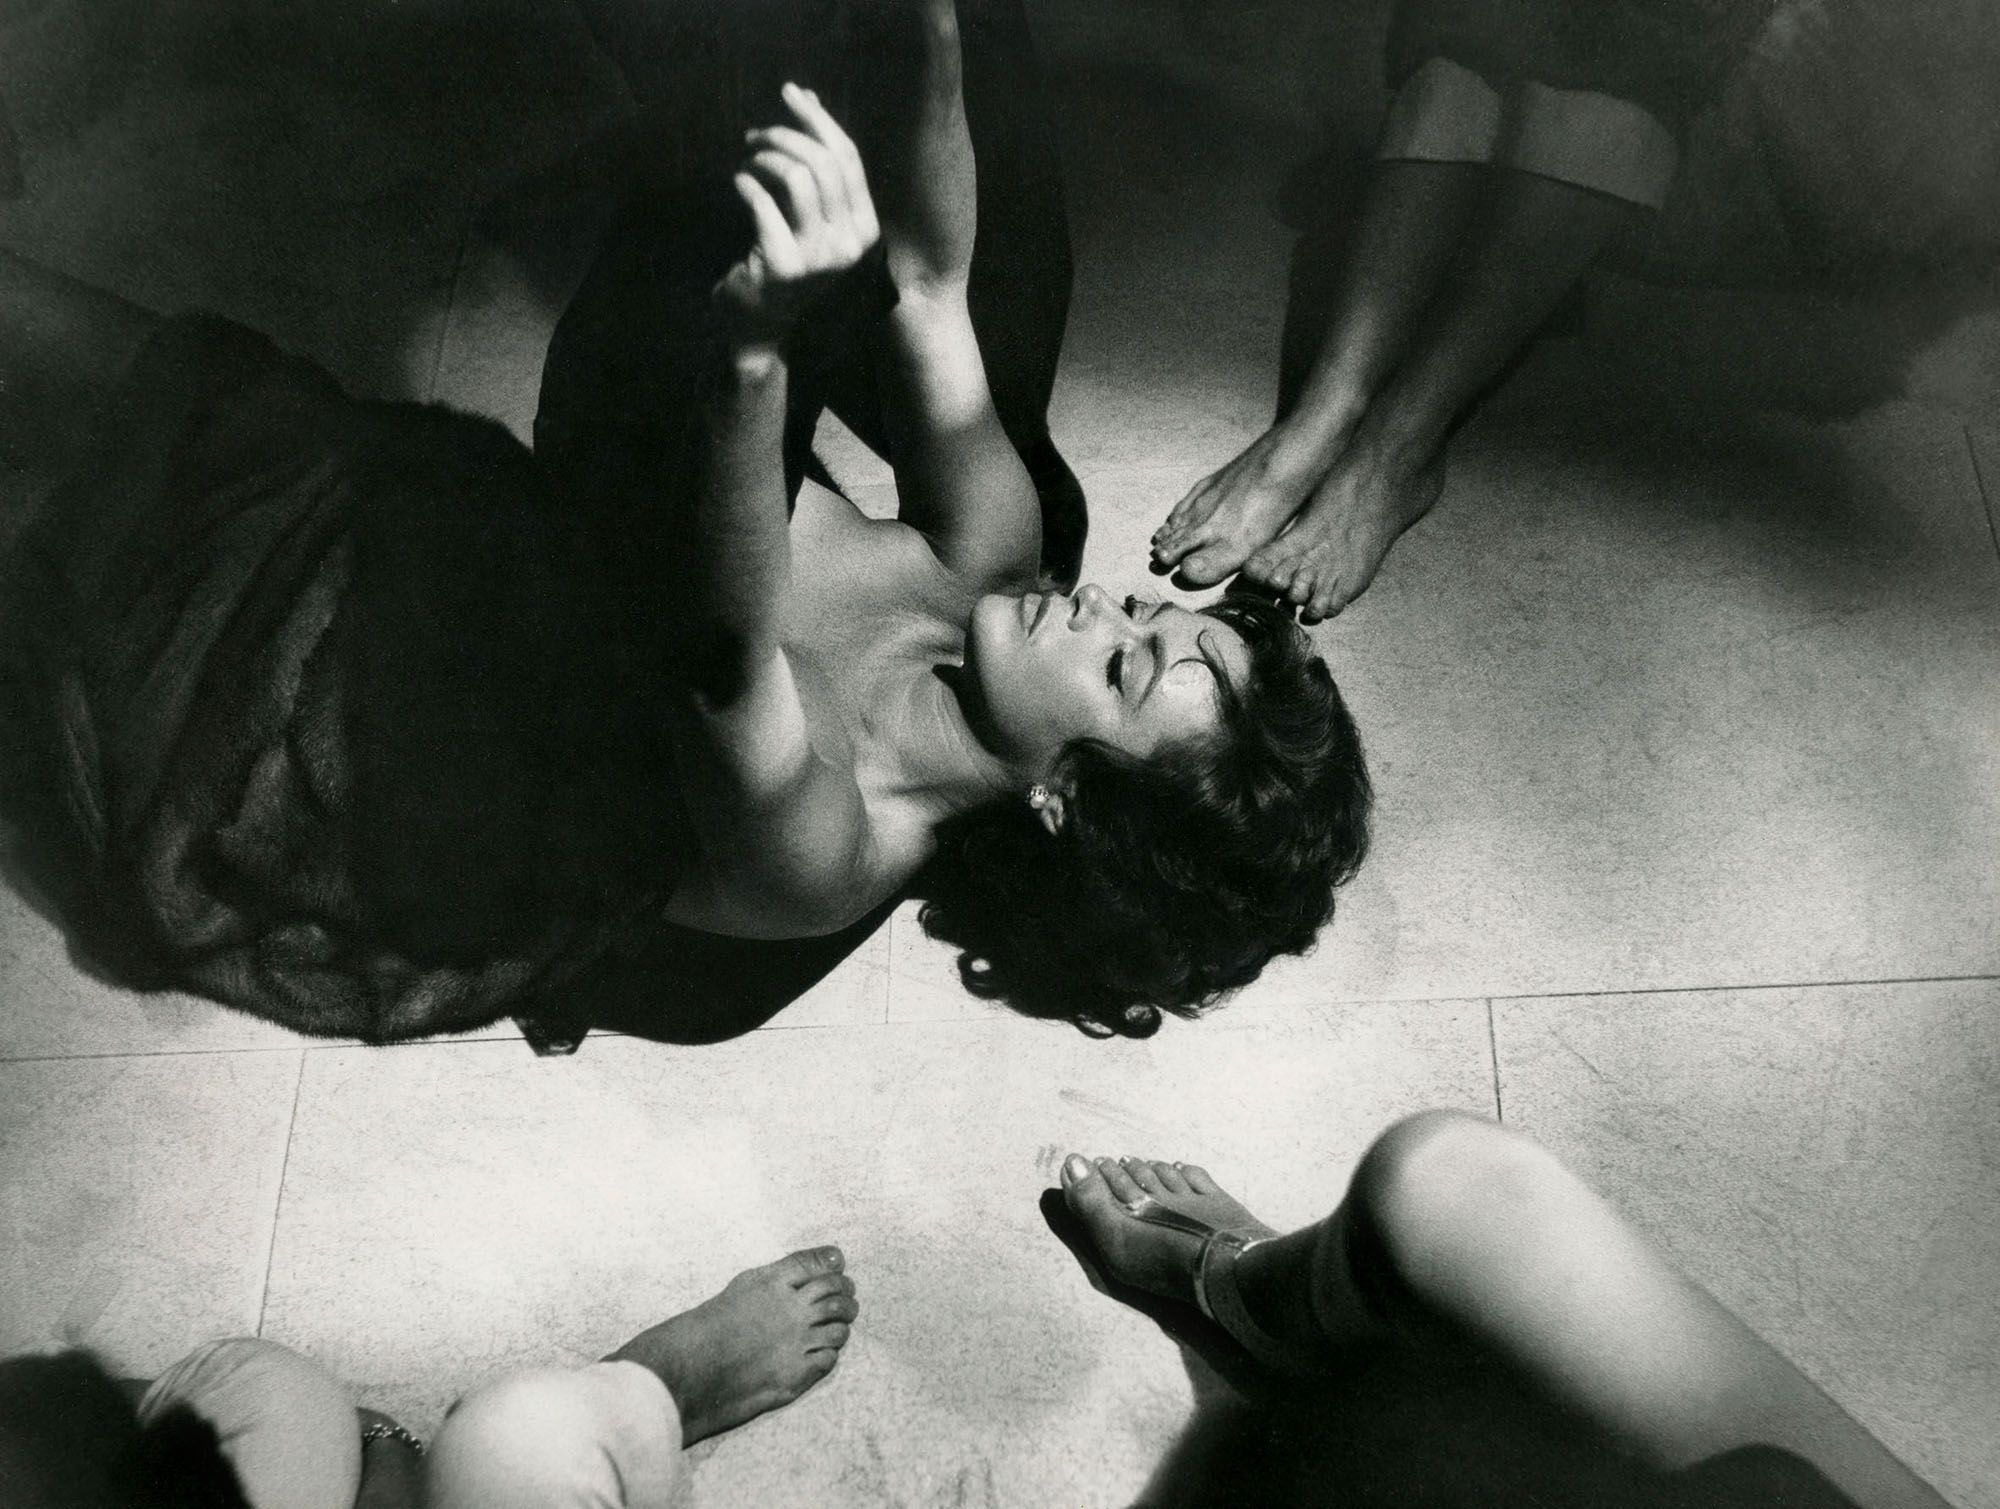 by Pierluigi Praturlon - Anita Ekberg as Sylvia in La Dolce Vita (The Sweet Life) 1959.jpg